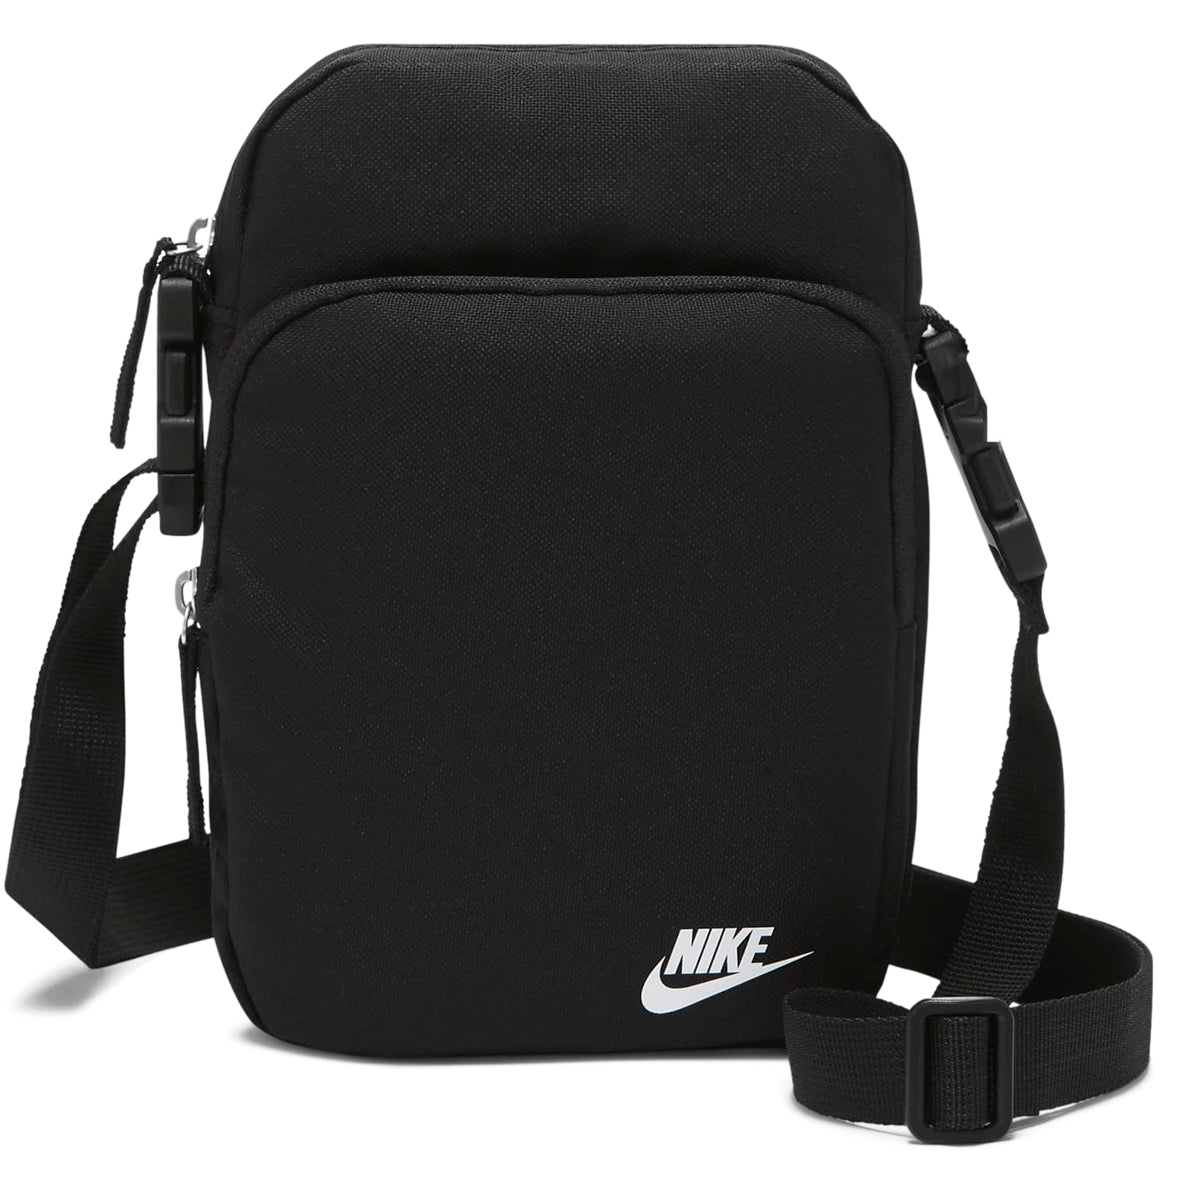 Nike Heritage Bag - Black/Black/White image 1